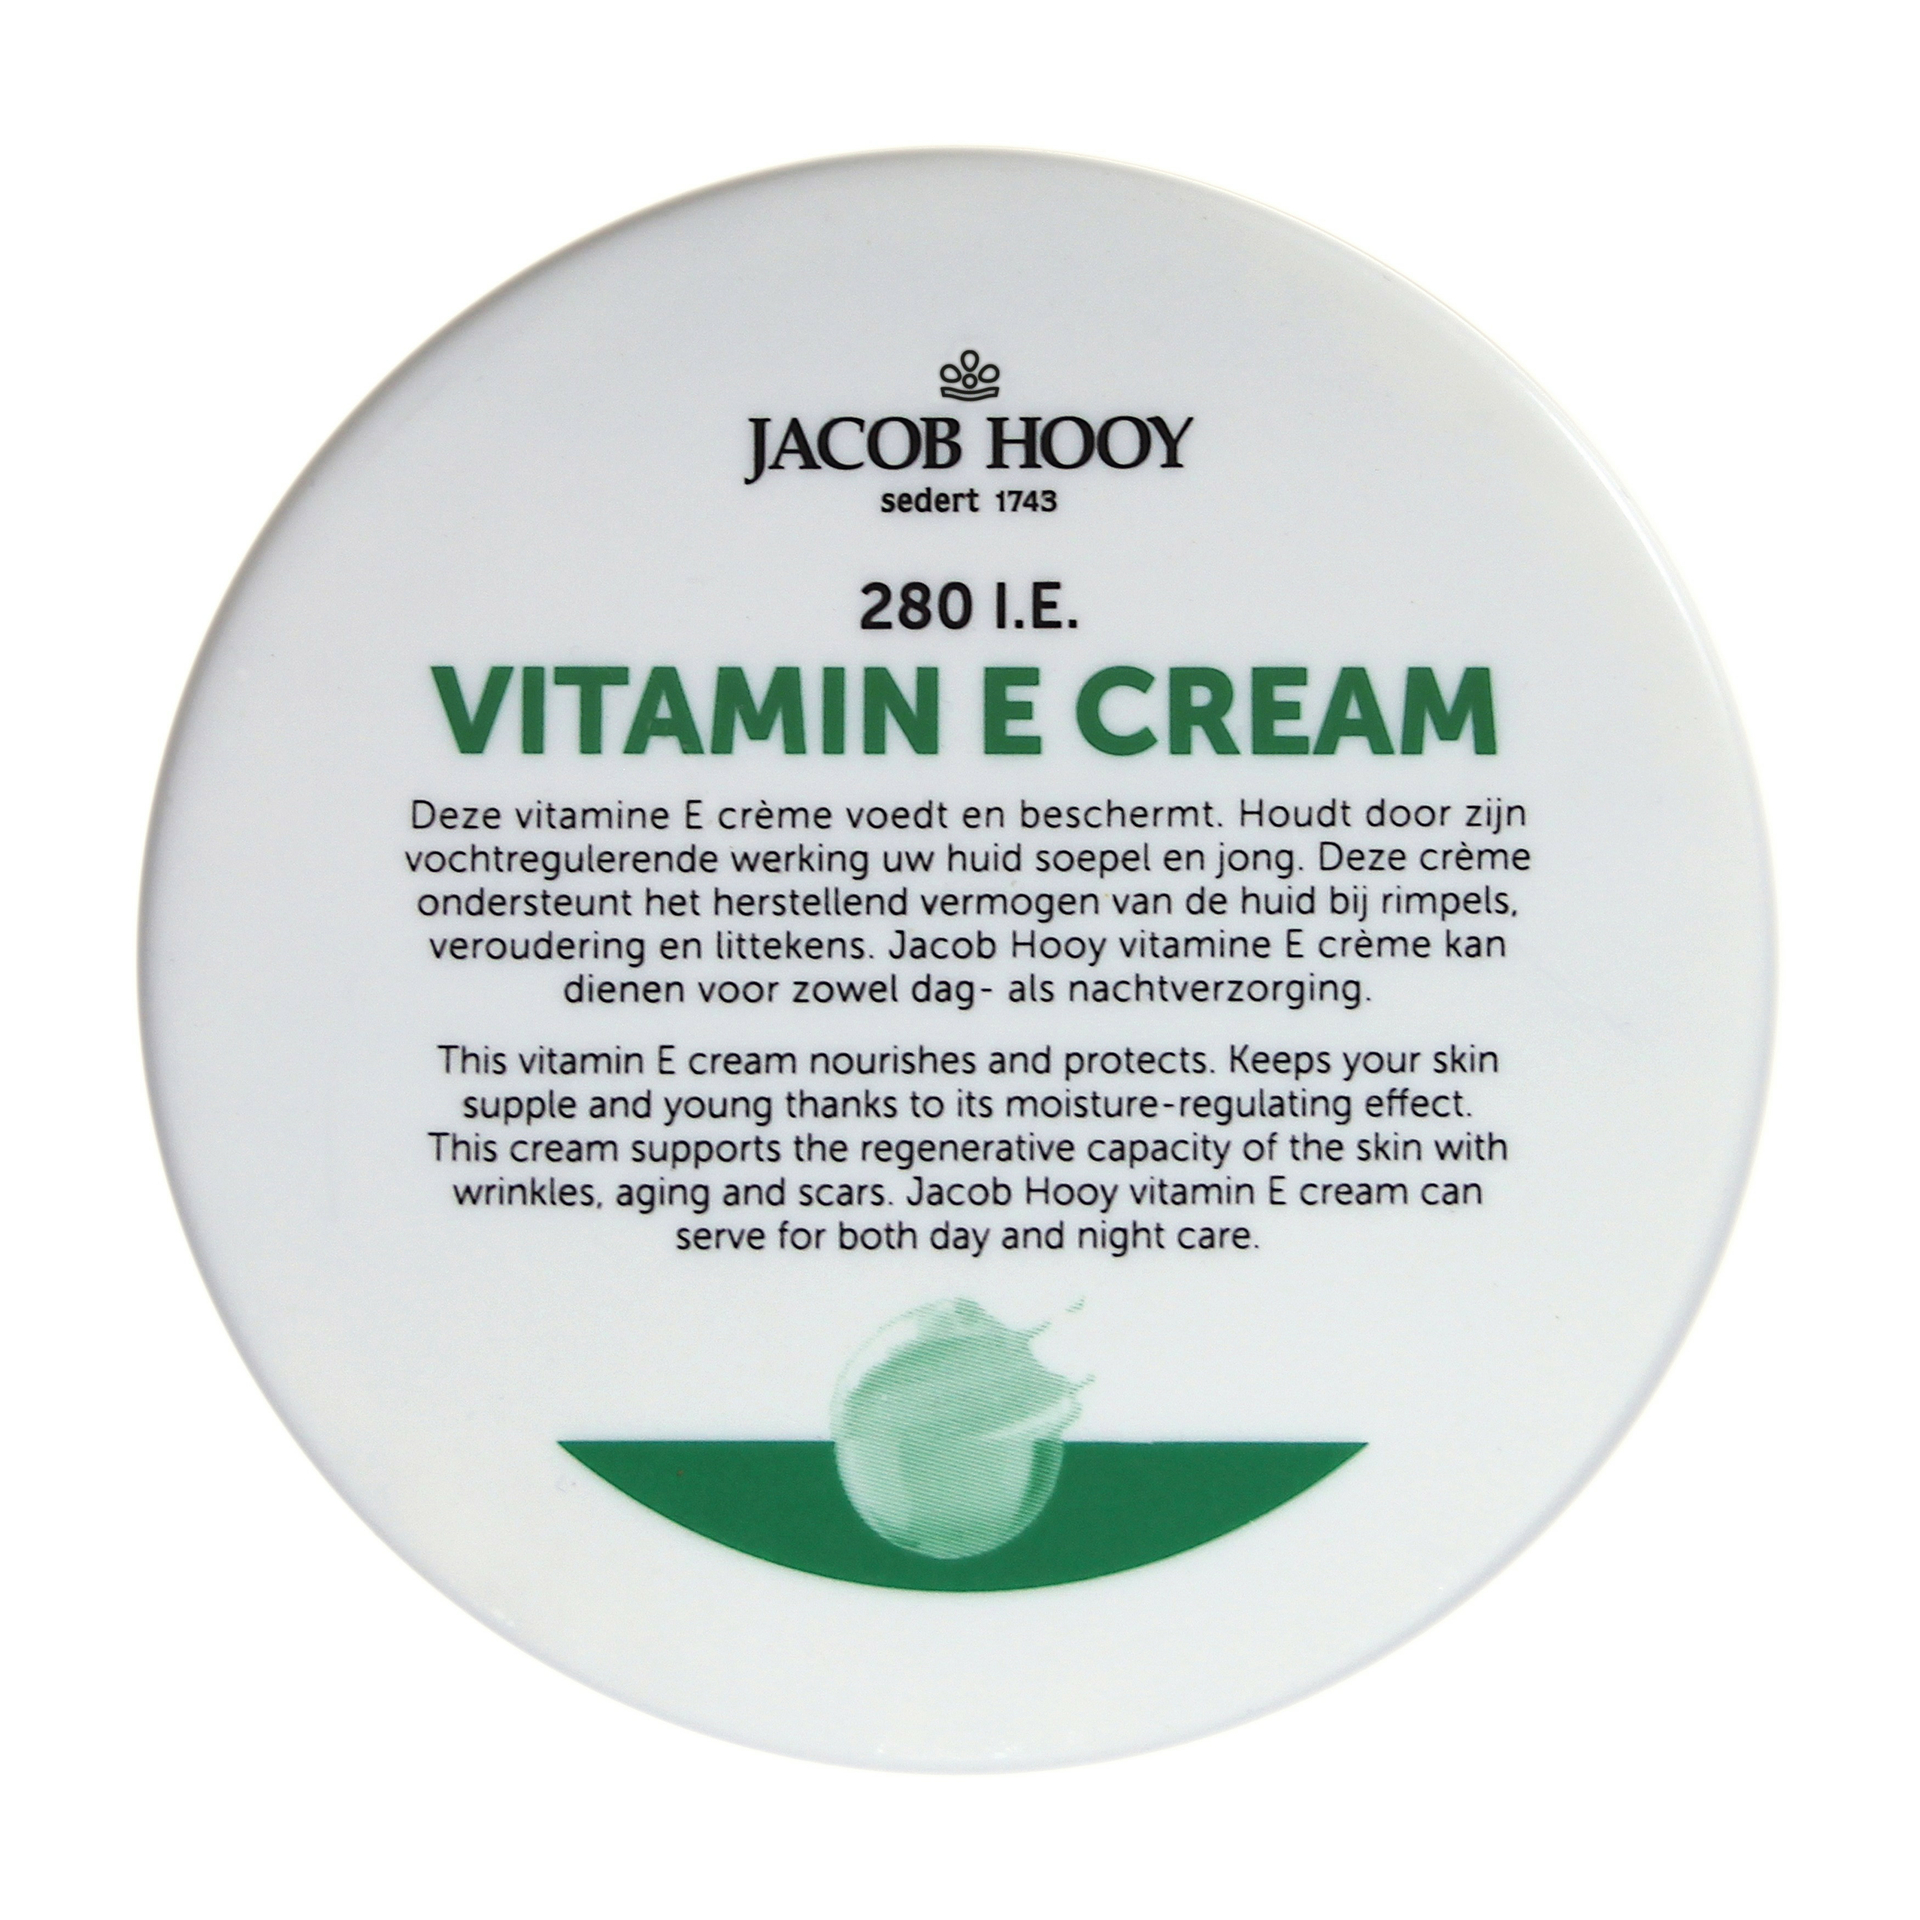 Jacob Hooy Vitamine E Crème 280 IU